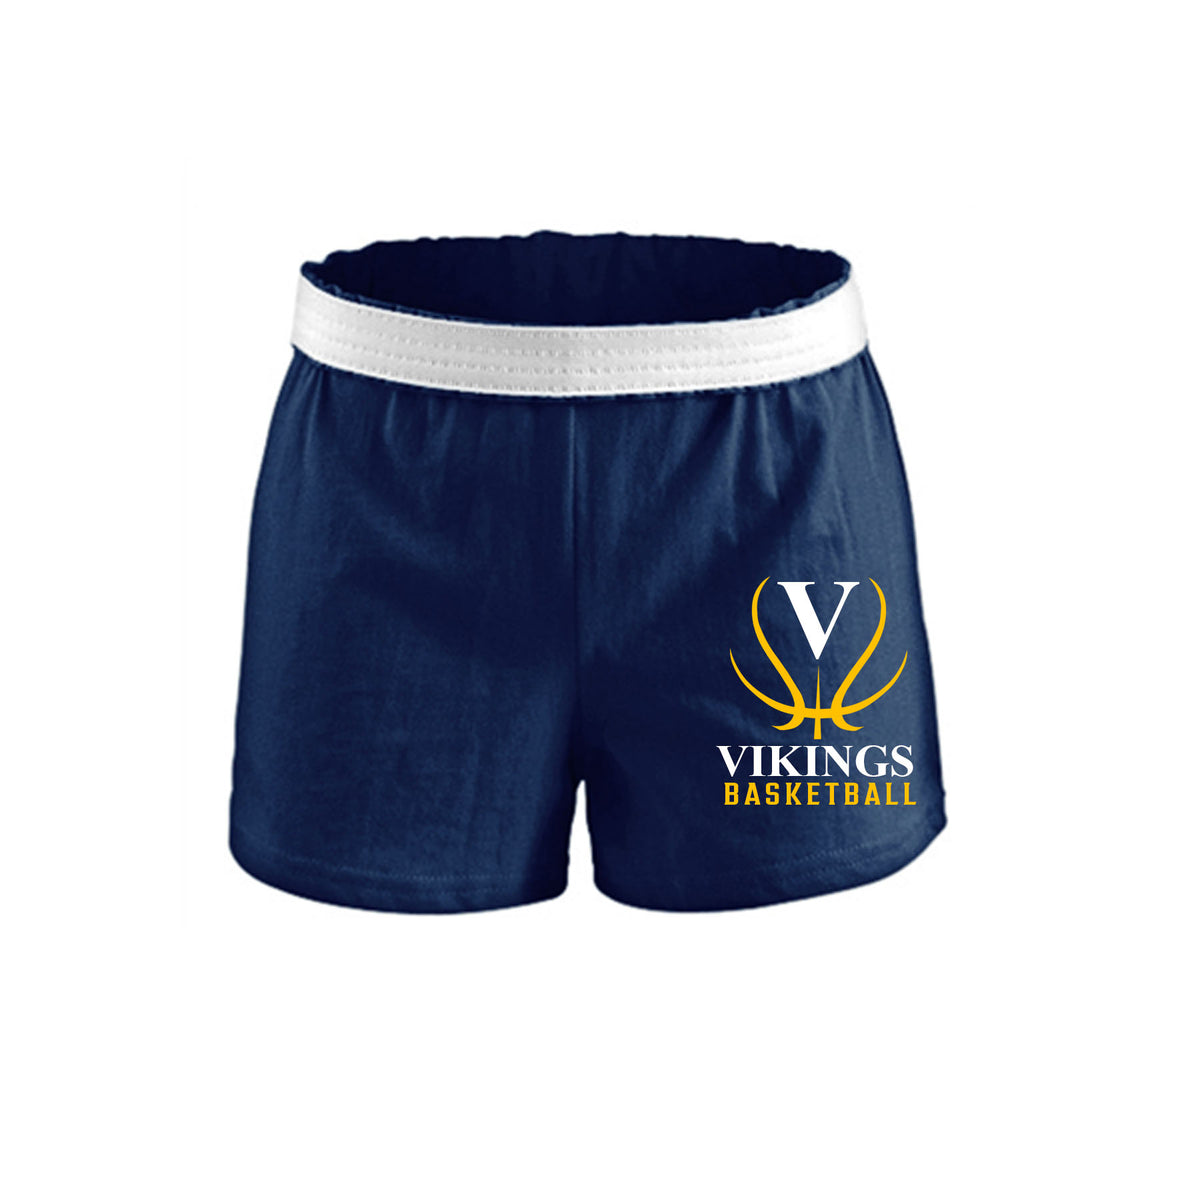 Vikings Basketball girls Shorts Design 3